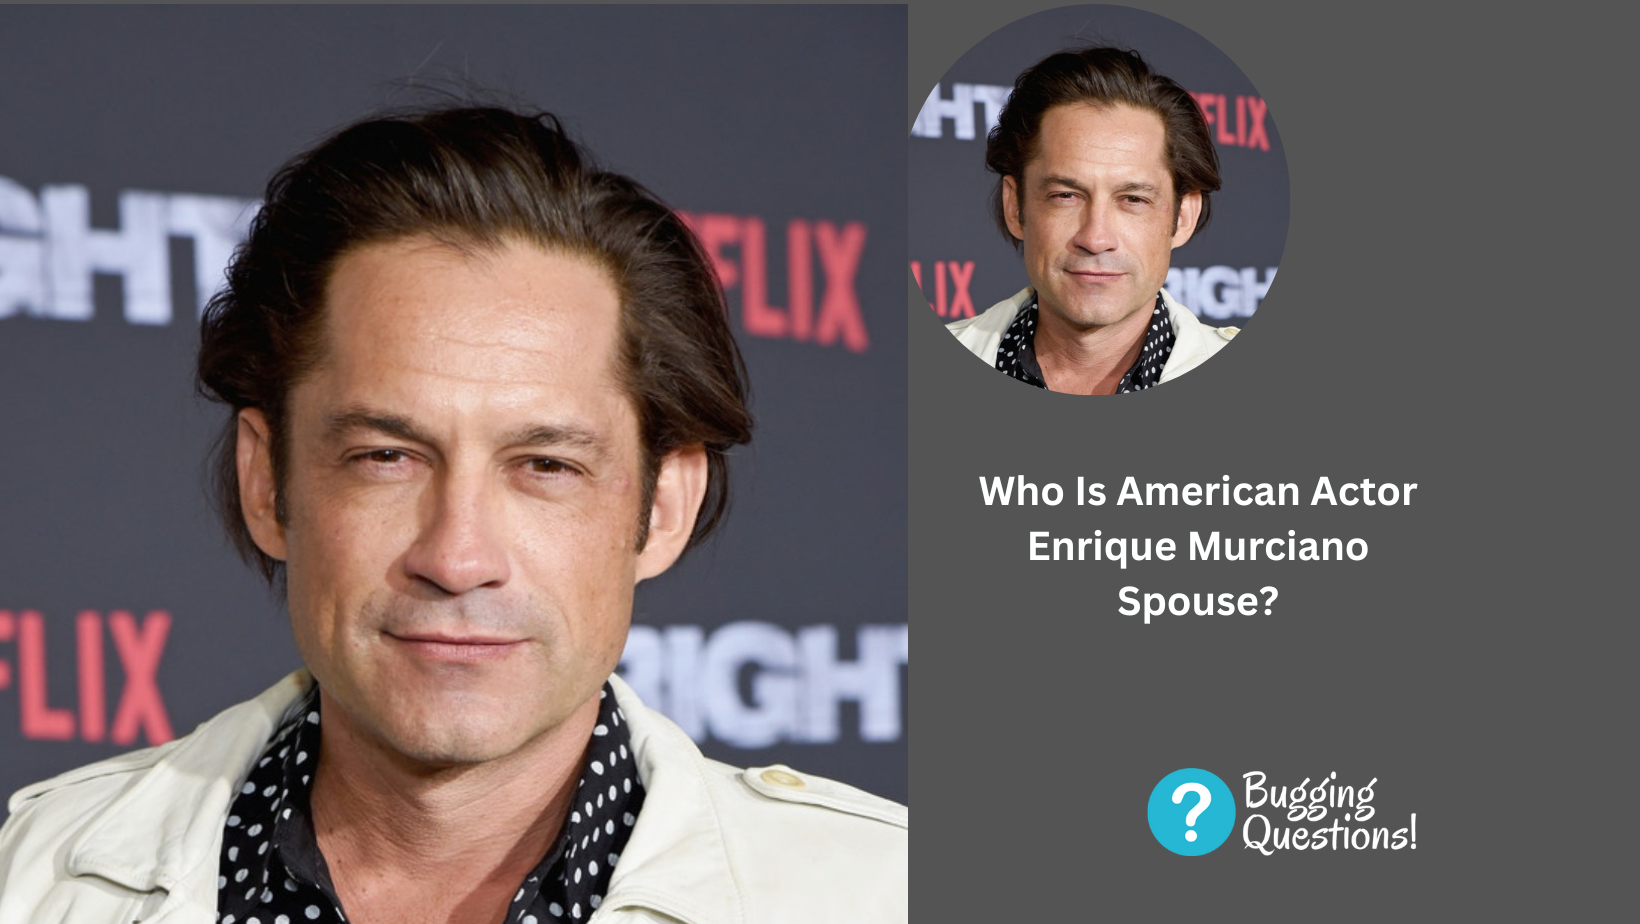 Who Is American Actor Enrique Murciano Spouse?